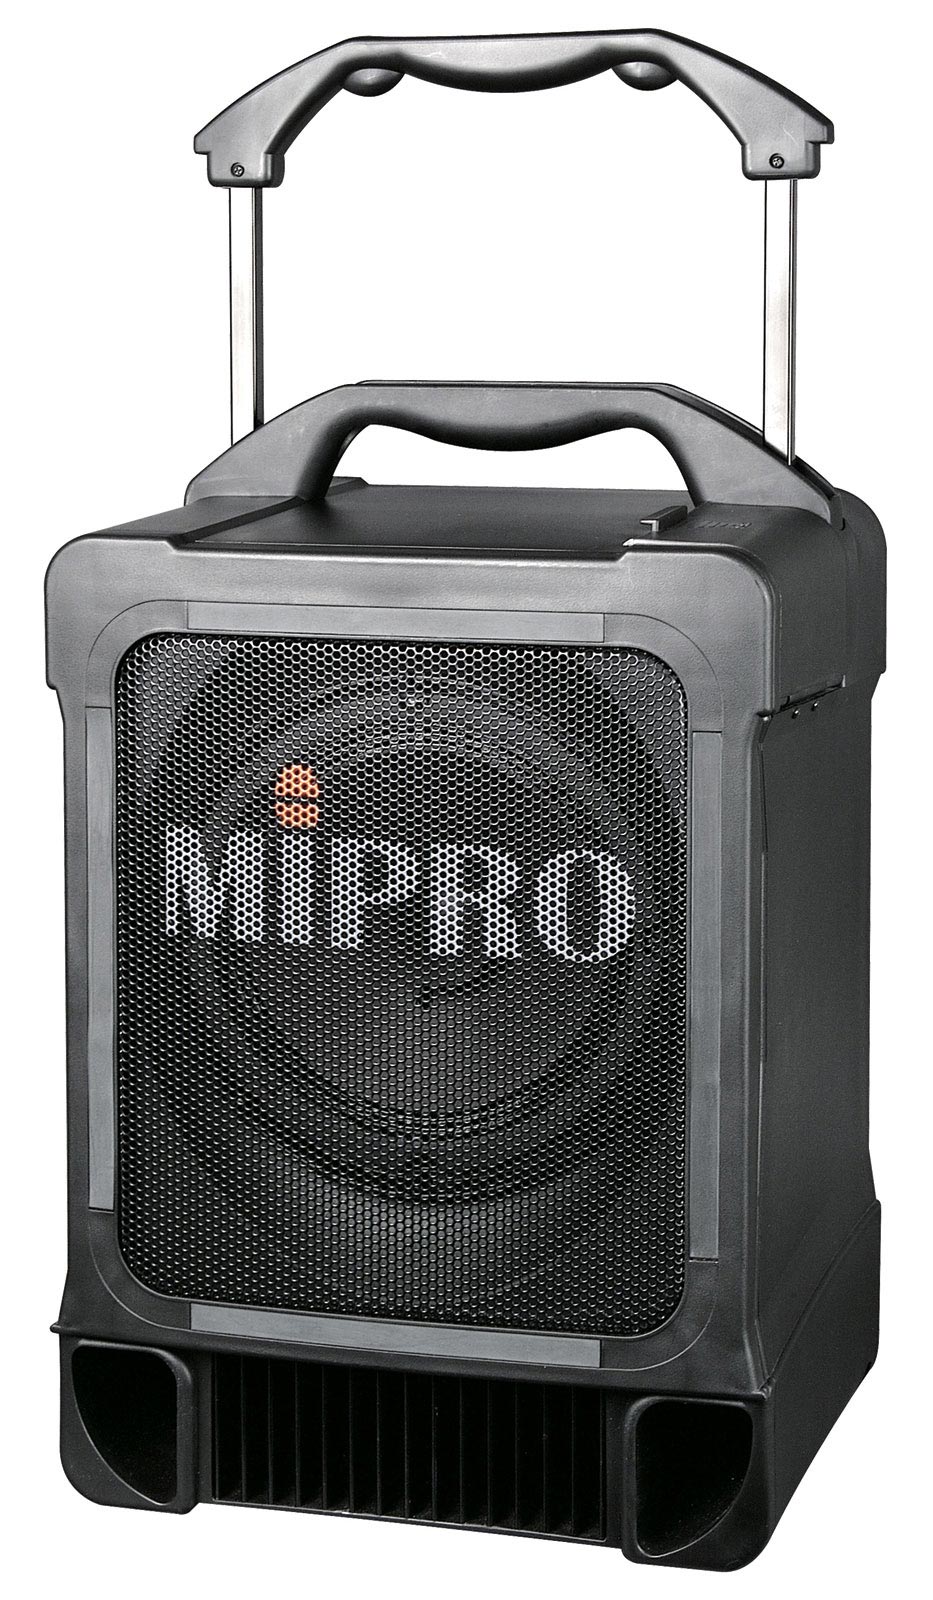 MIPRO MA707 PAD - LECTEUR CD + USB + BLUETOOTH